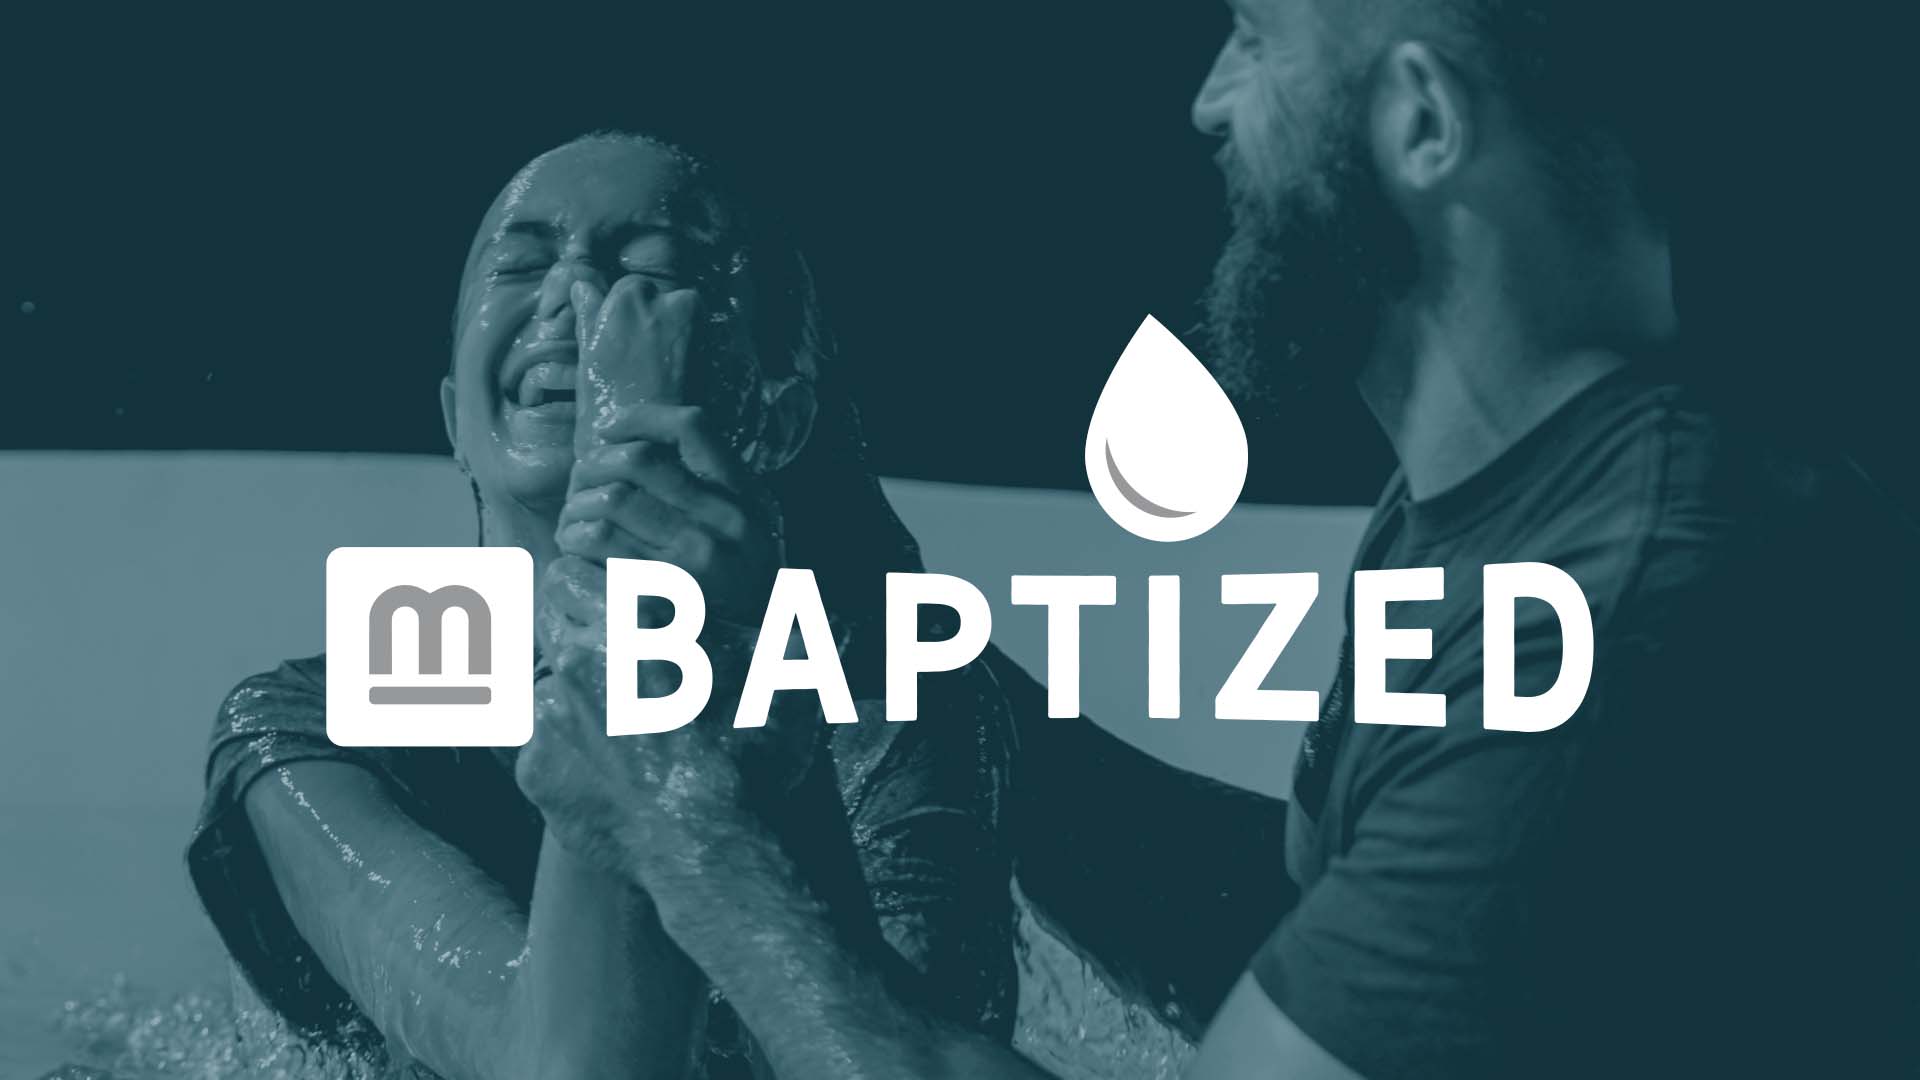 Baptized, New Life, Set Free at Mission City in San Antonio